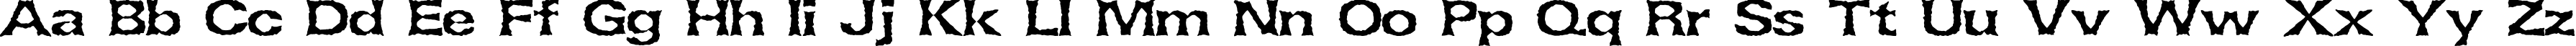 Пример написания английского алфавита шрифтом Lethargic (BRK)